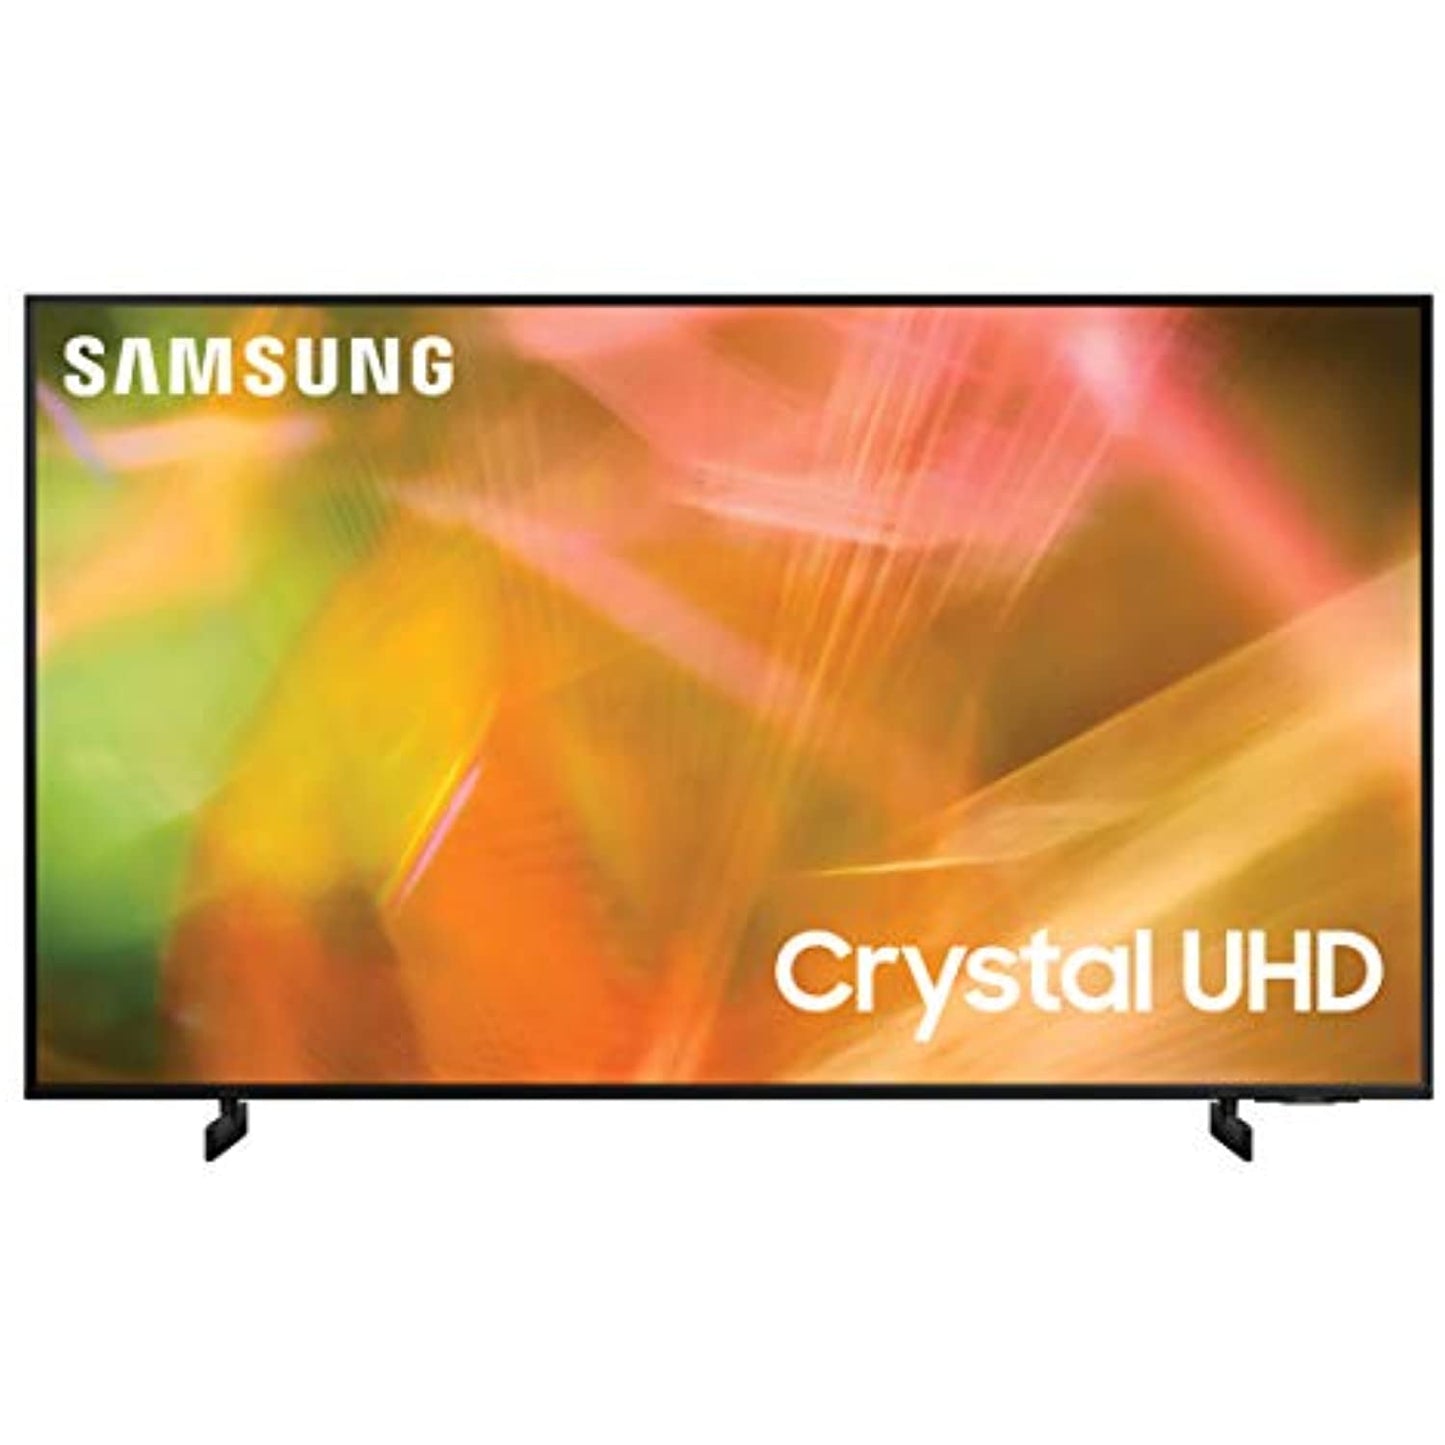 SAMSUNG 50-Inch Class Crystal UHD AU8000 Series - 4K UHD HDR Smart TV with Alexa Built-in (UN50AU8000FXZA, 2021 Model) - A Horizon Dawn